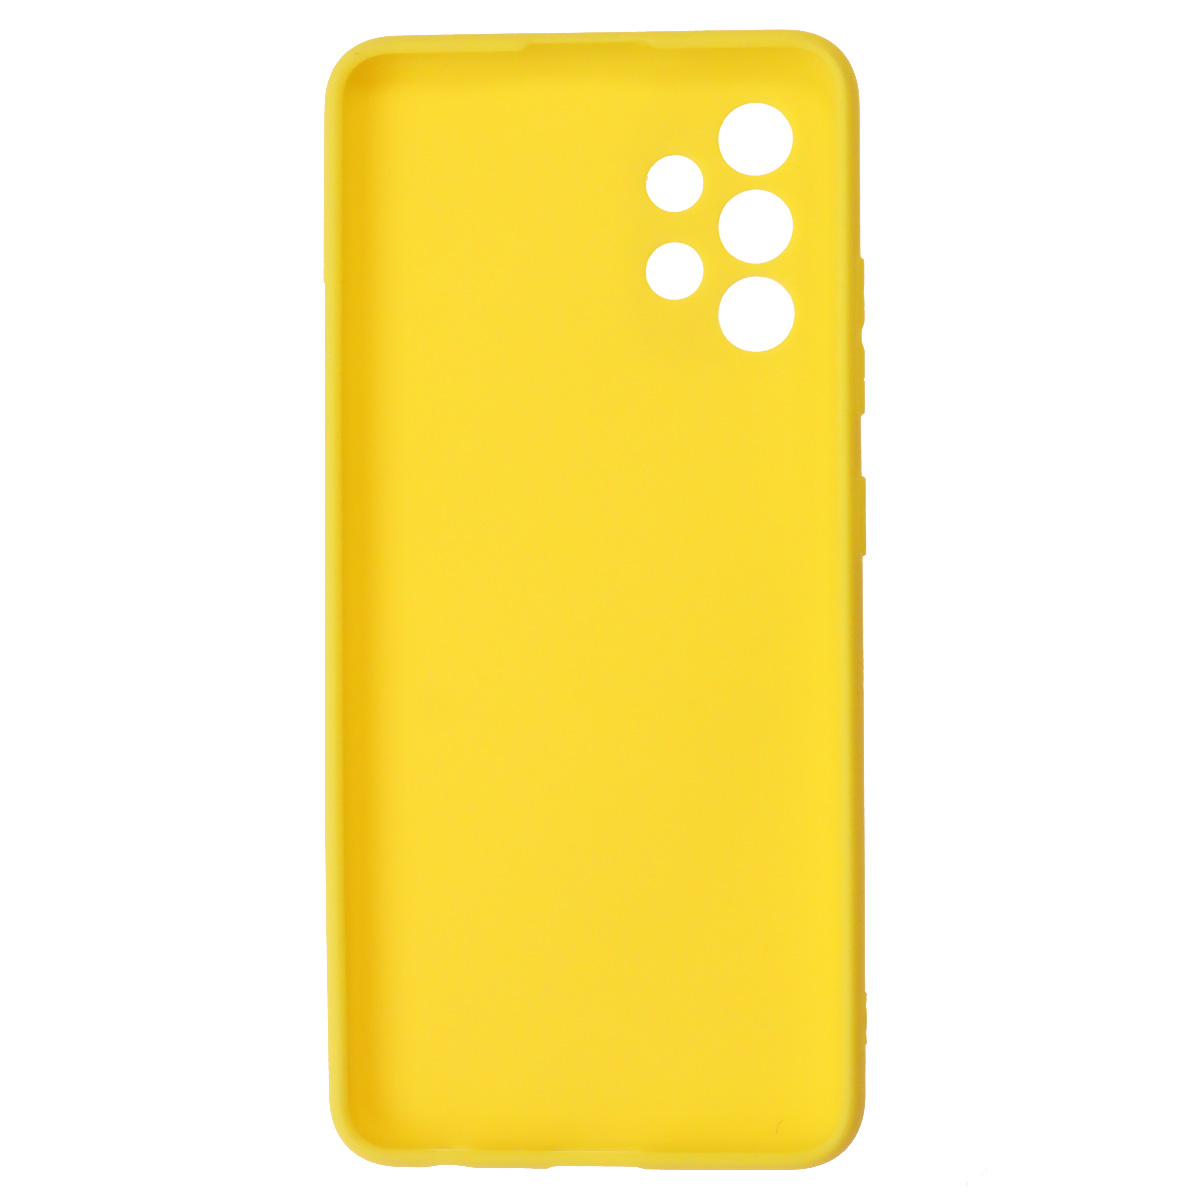 Чехол накладка Soft Touch для SAMSUNG Galaxy A32 (SM-A325F), силикон, цвет желтый